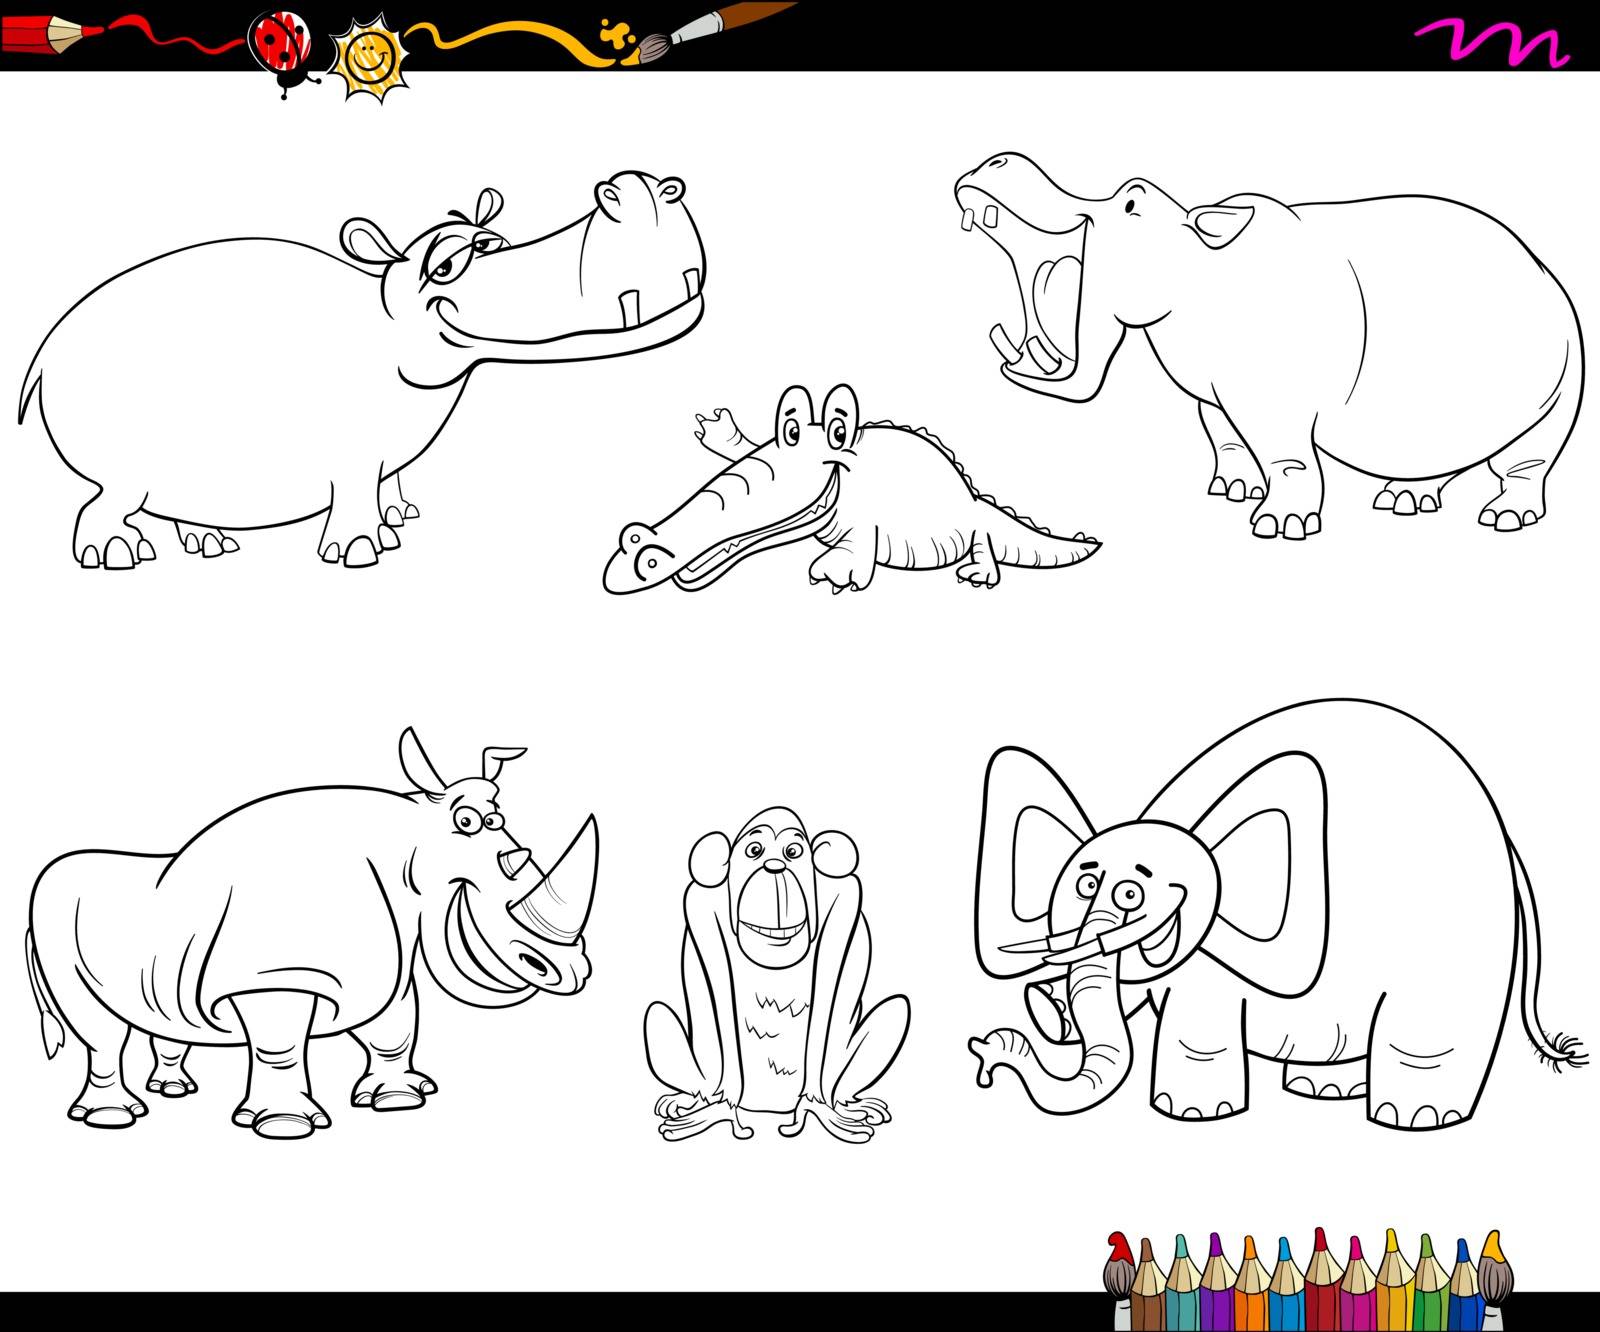 Black and White Cartoon Illustration of Safari Animal Characters Set Coloring Page